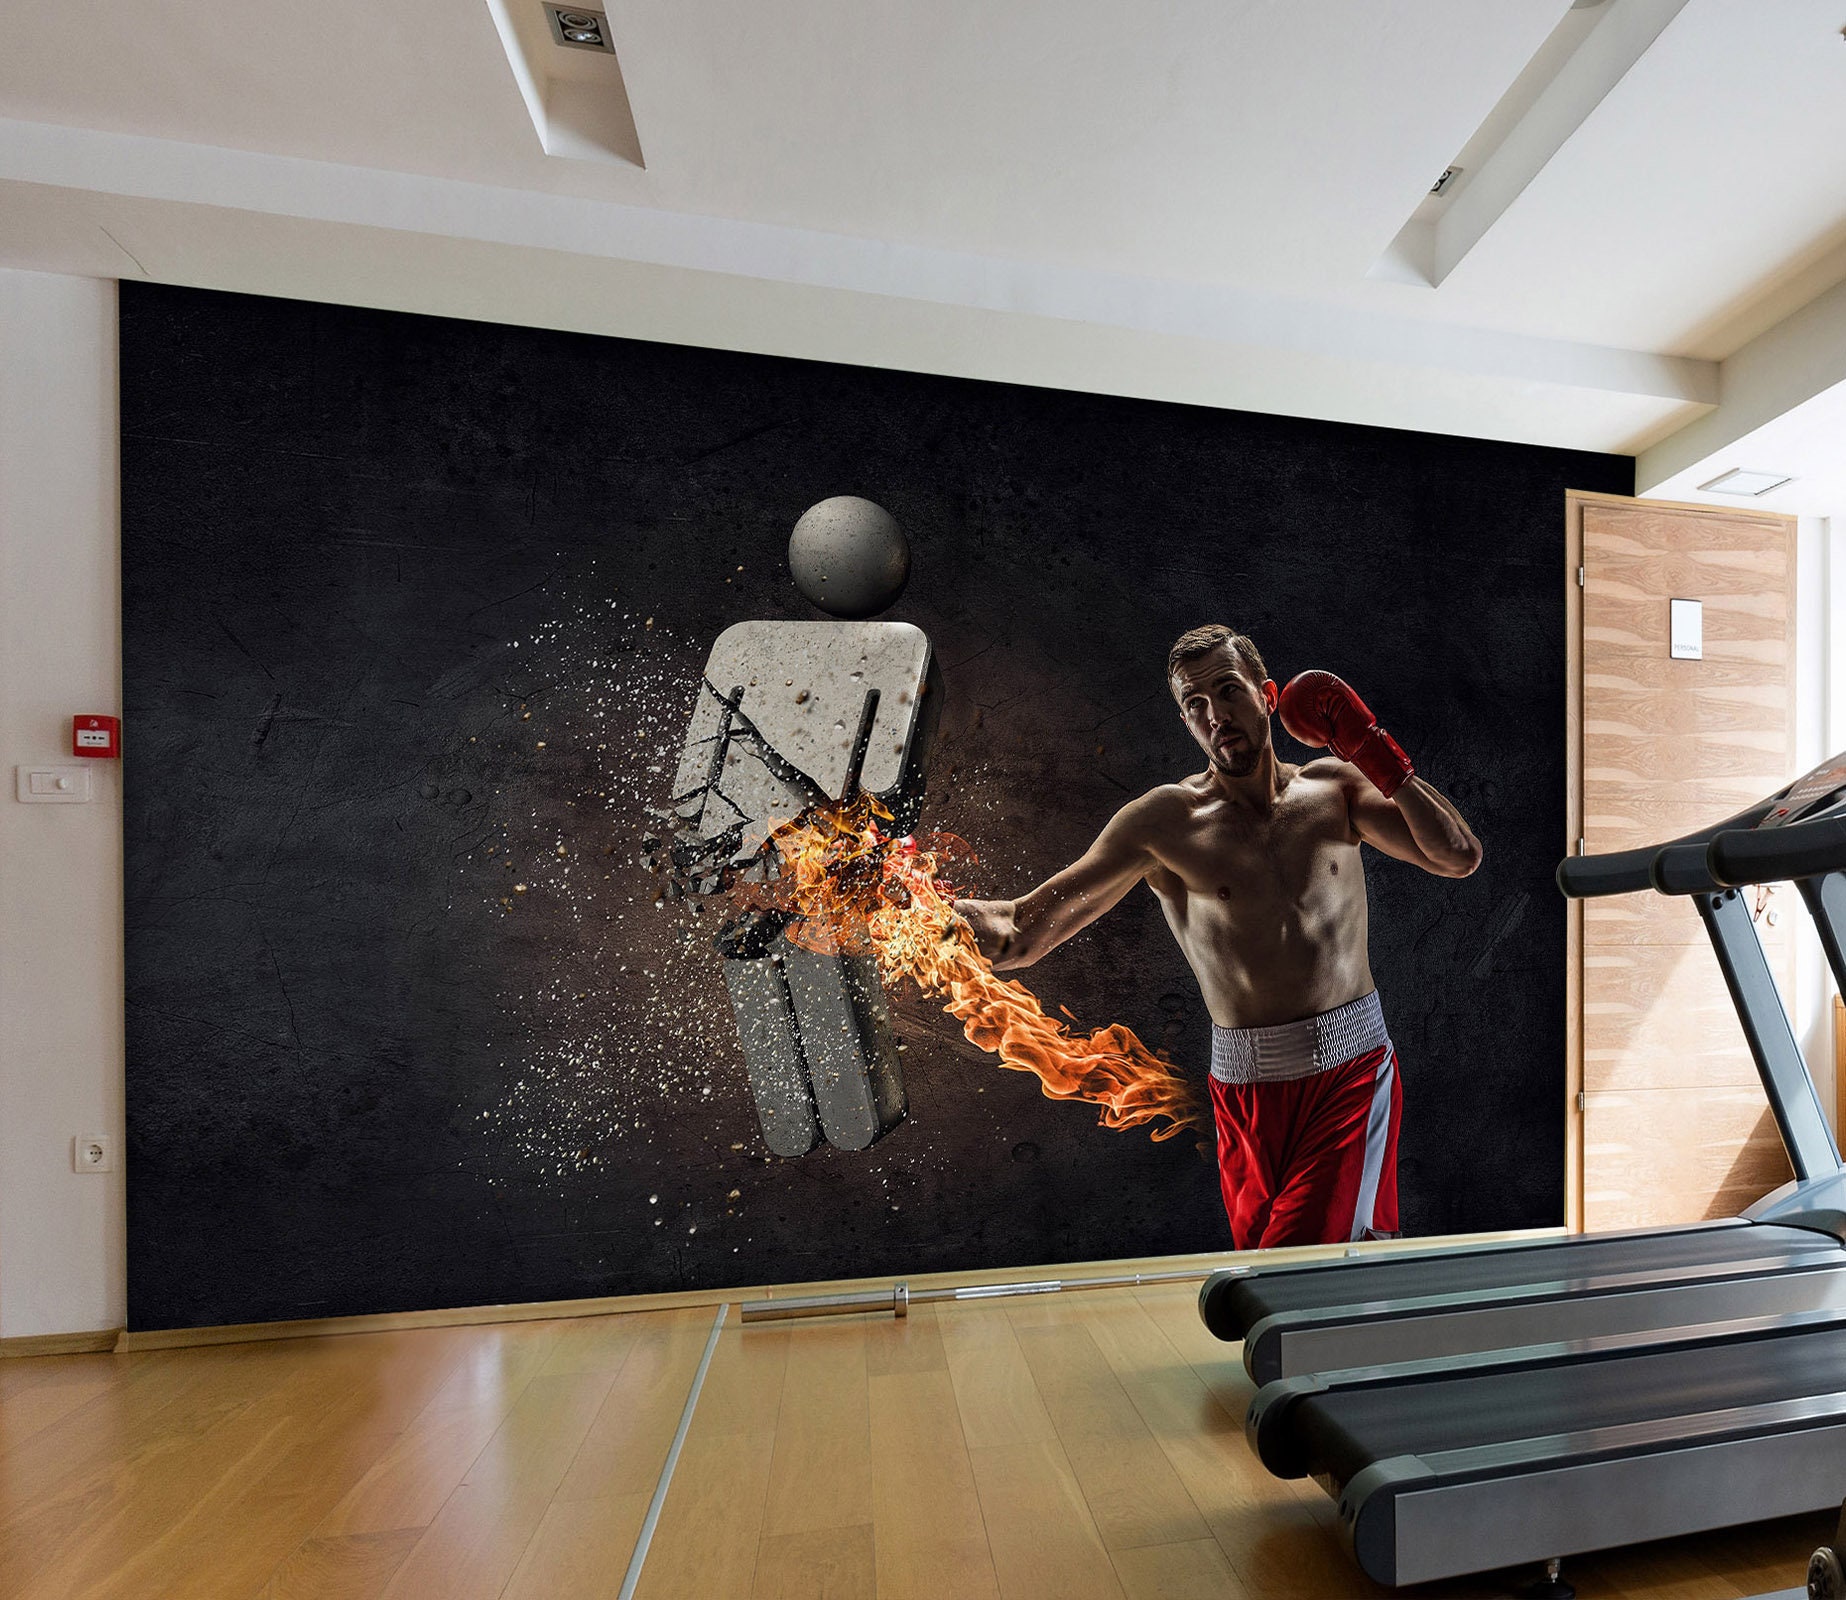 3D Powerful Boxing FFA7486 Gym Removable Wallpaper Self Adhesive Wallpaper  Extra Large Peel & Stick Wallpaper Wallpaper Mural 